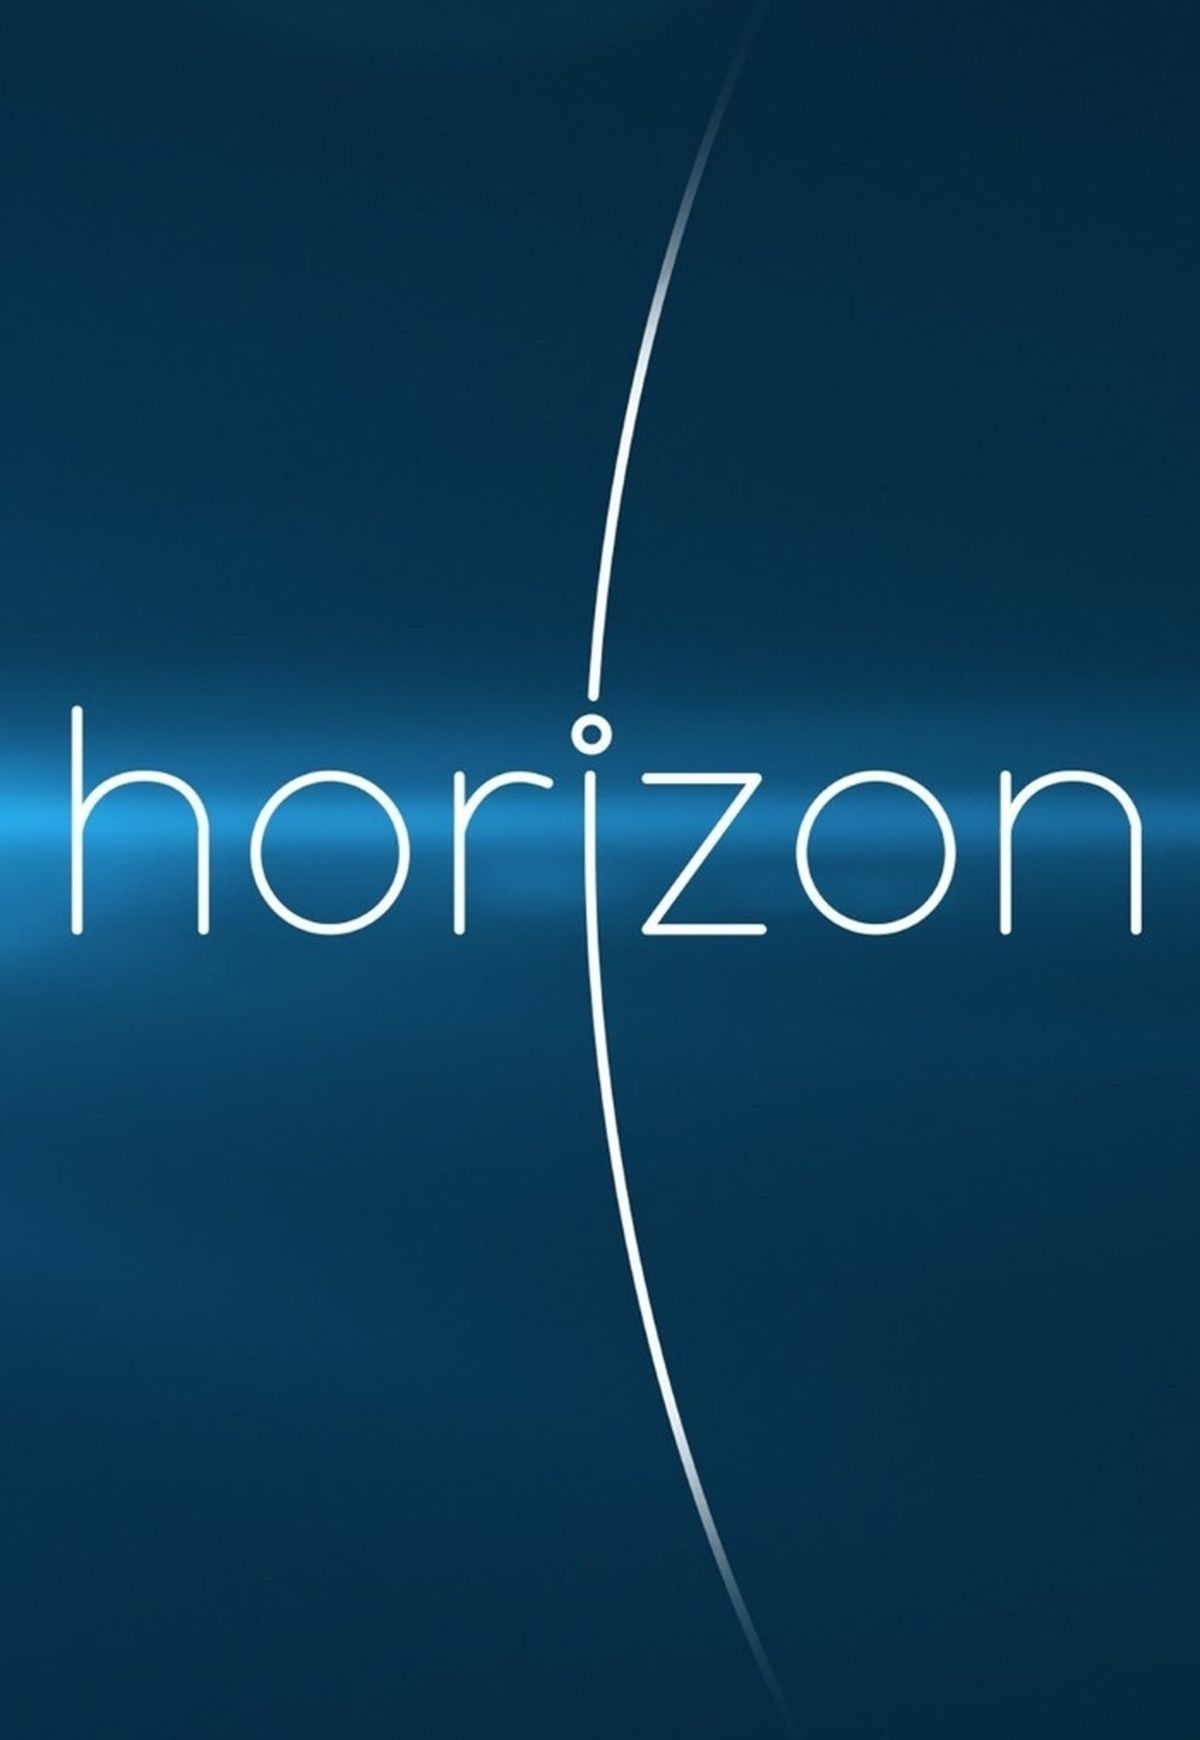 Seriāla "Horizonts" titulbilde